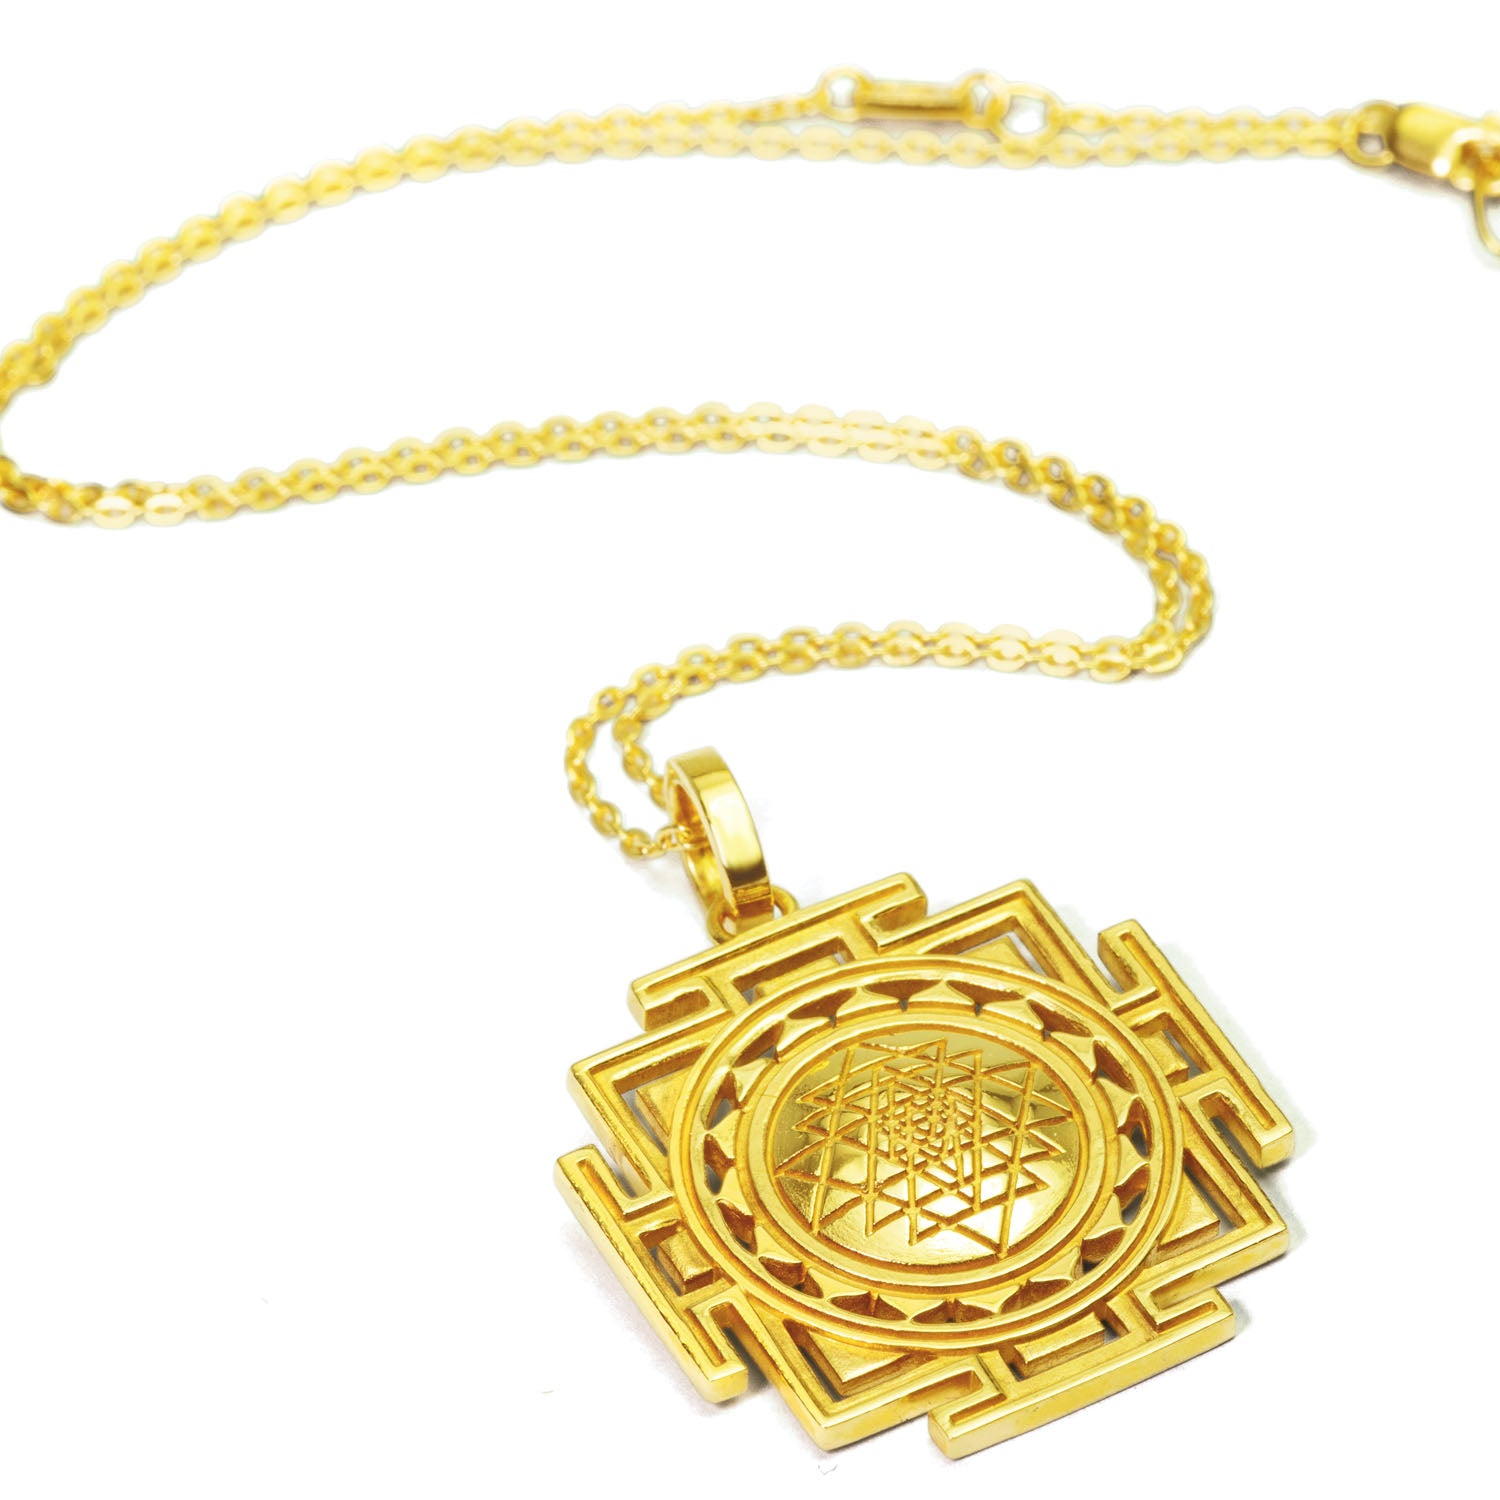 Gold-plated Sri Yantra pendant by ETERNAL BLISS - Spiritual Jewellery